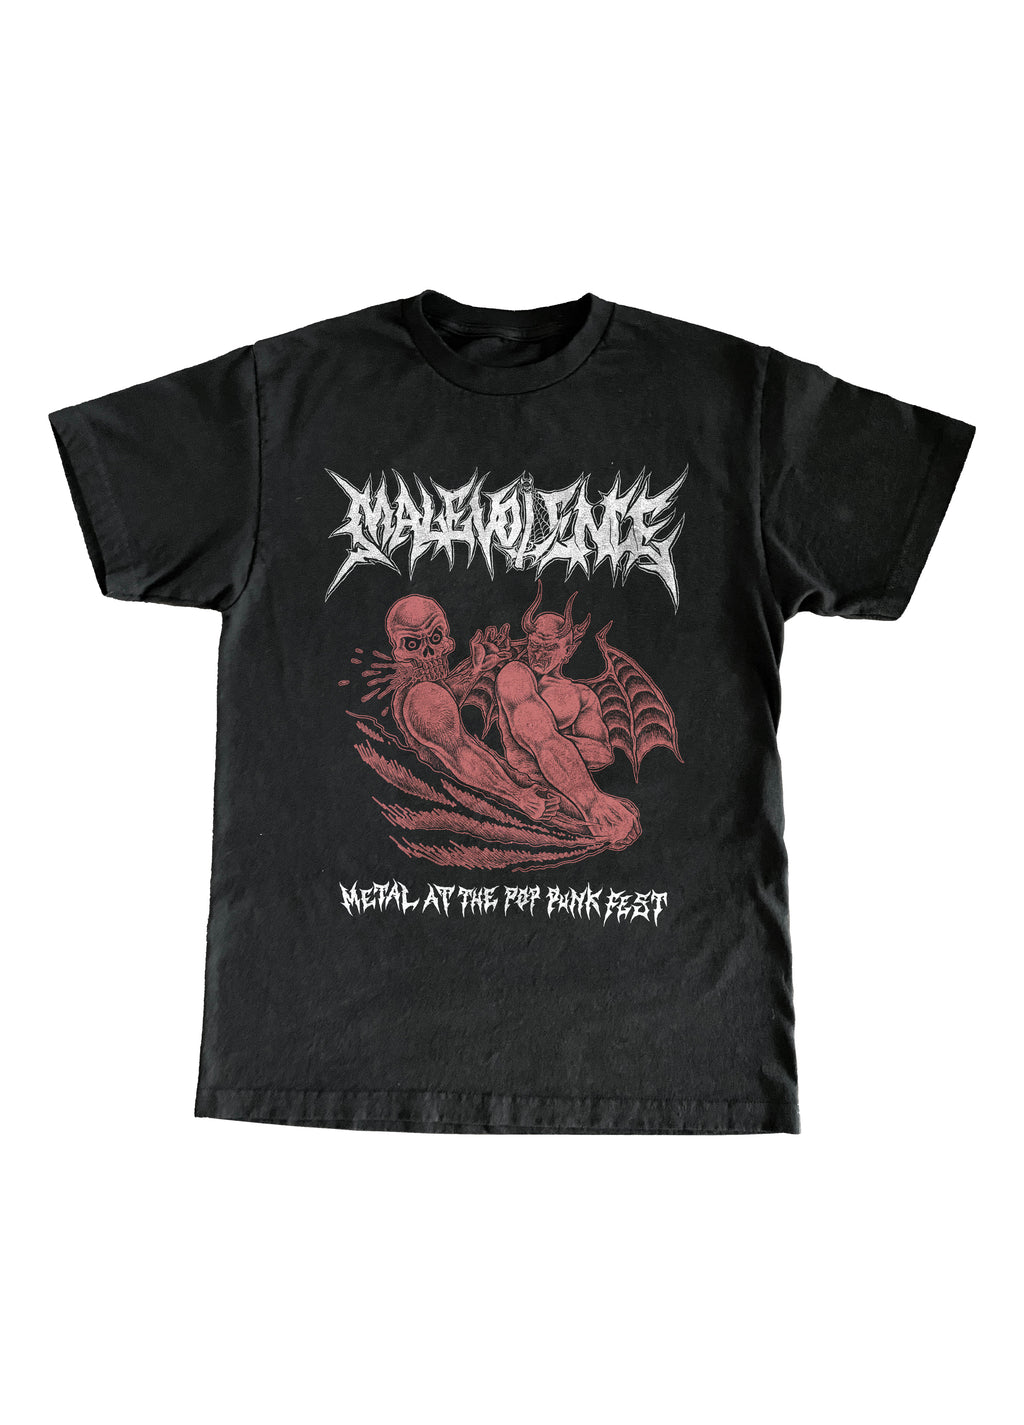 Malevolence - Metal At The Pop Punk Fest T-Shirt